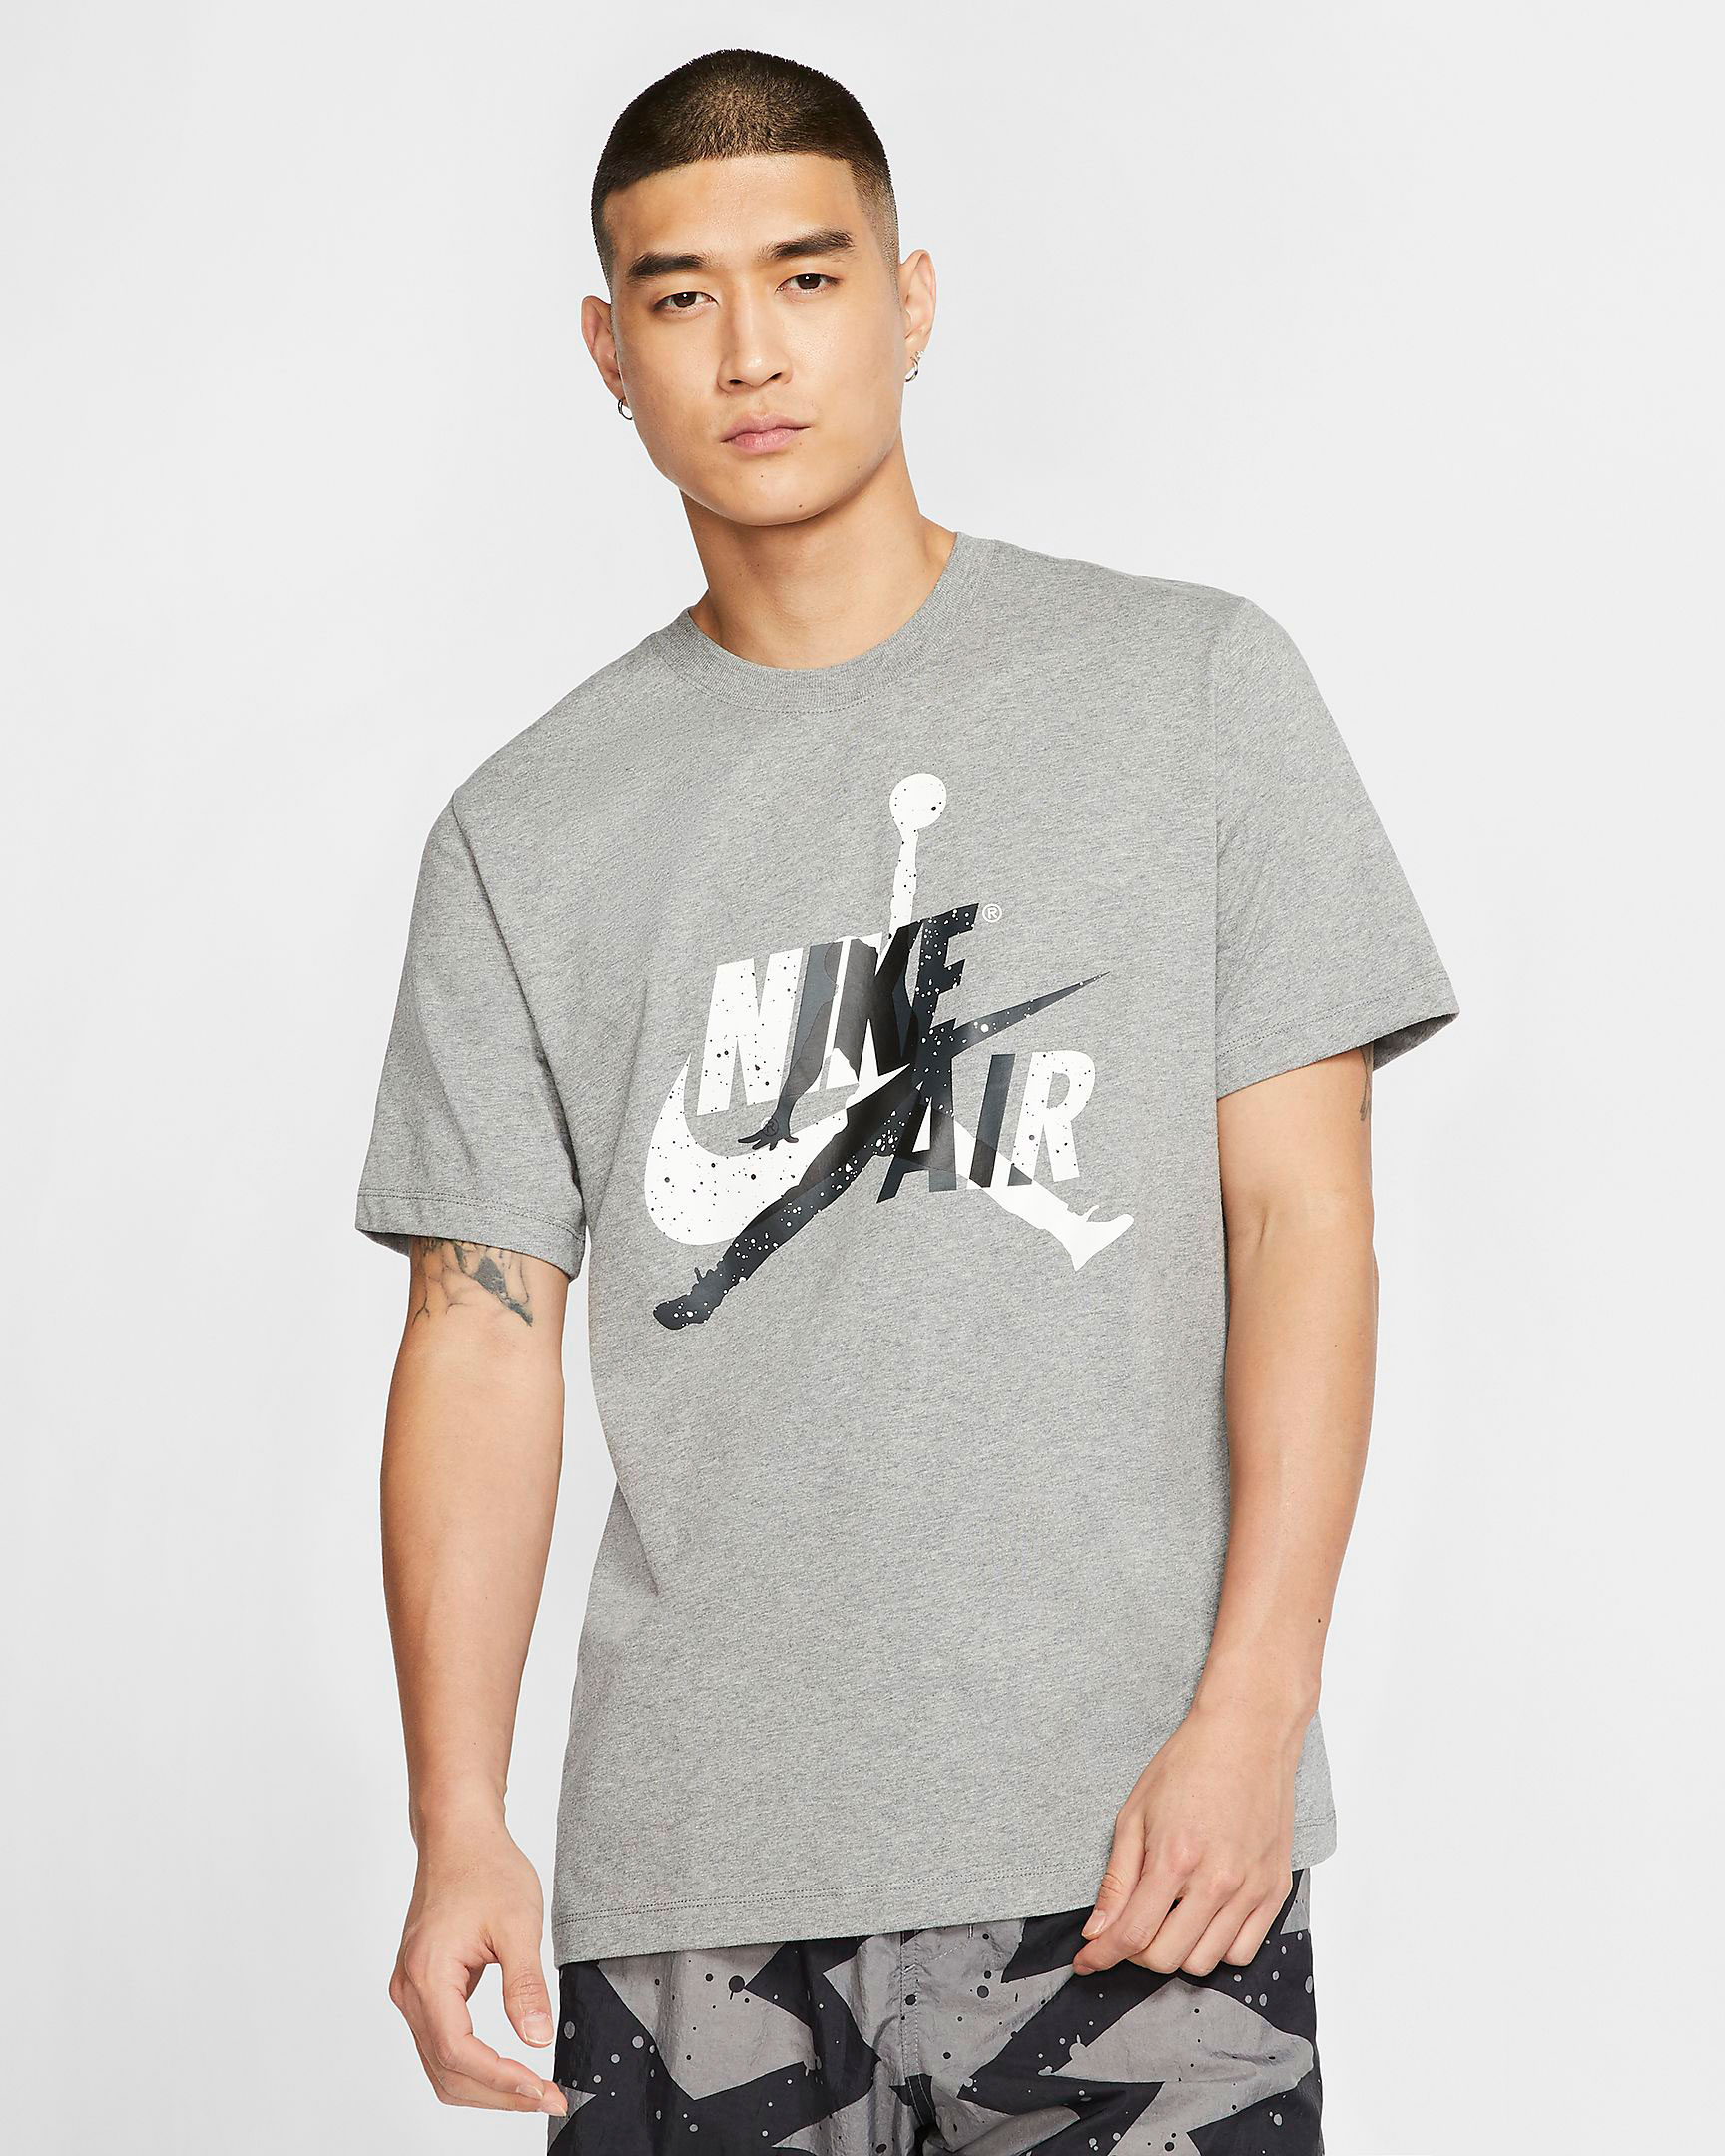 Air Jordan 1 Mid Smoke Grey Shirt Shorts Outfit | SneakerFits.com